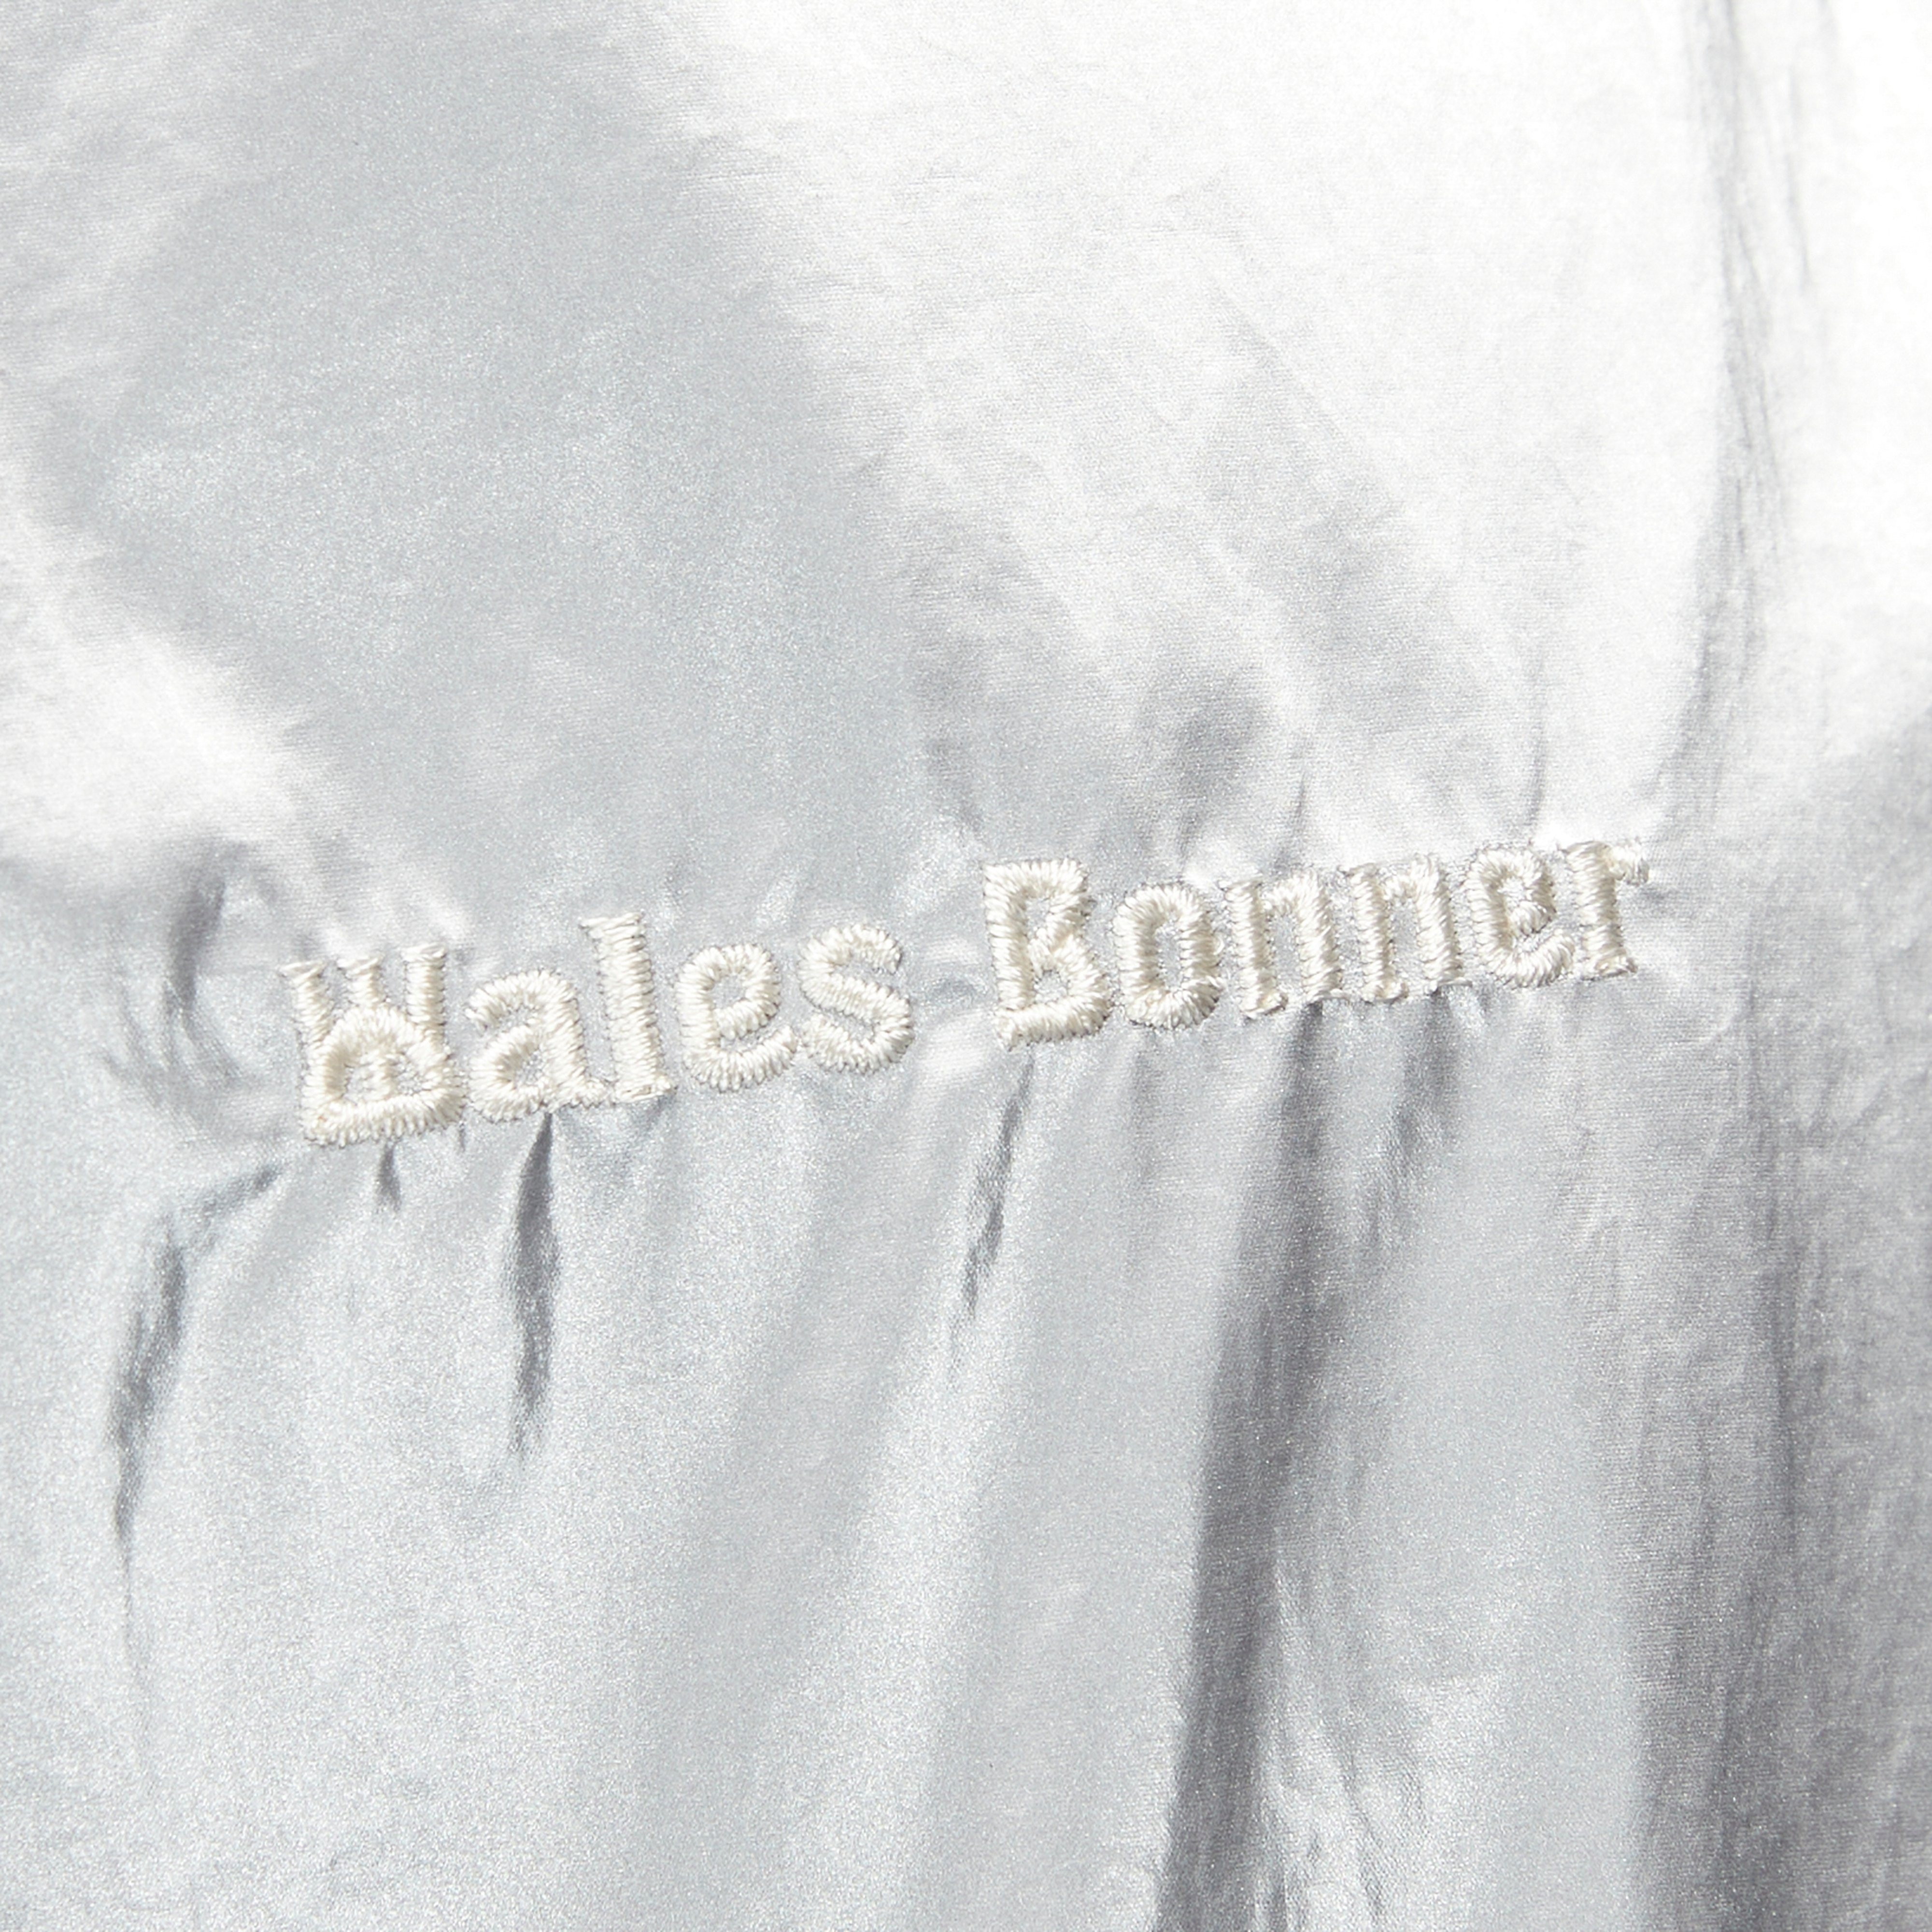 adidas Originals x Wales Bonner Anorak - 4